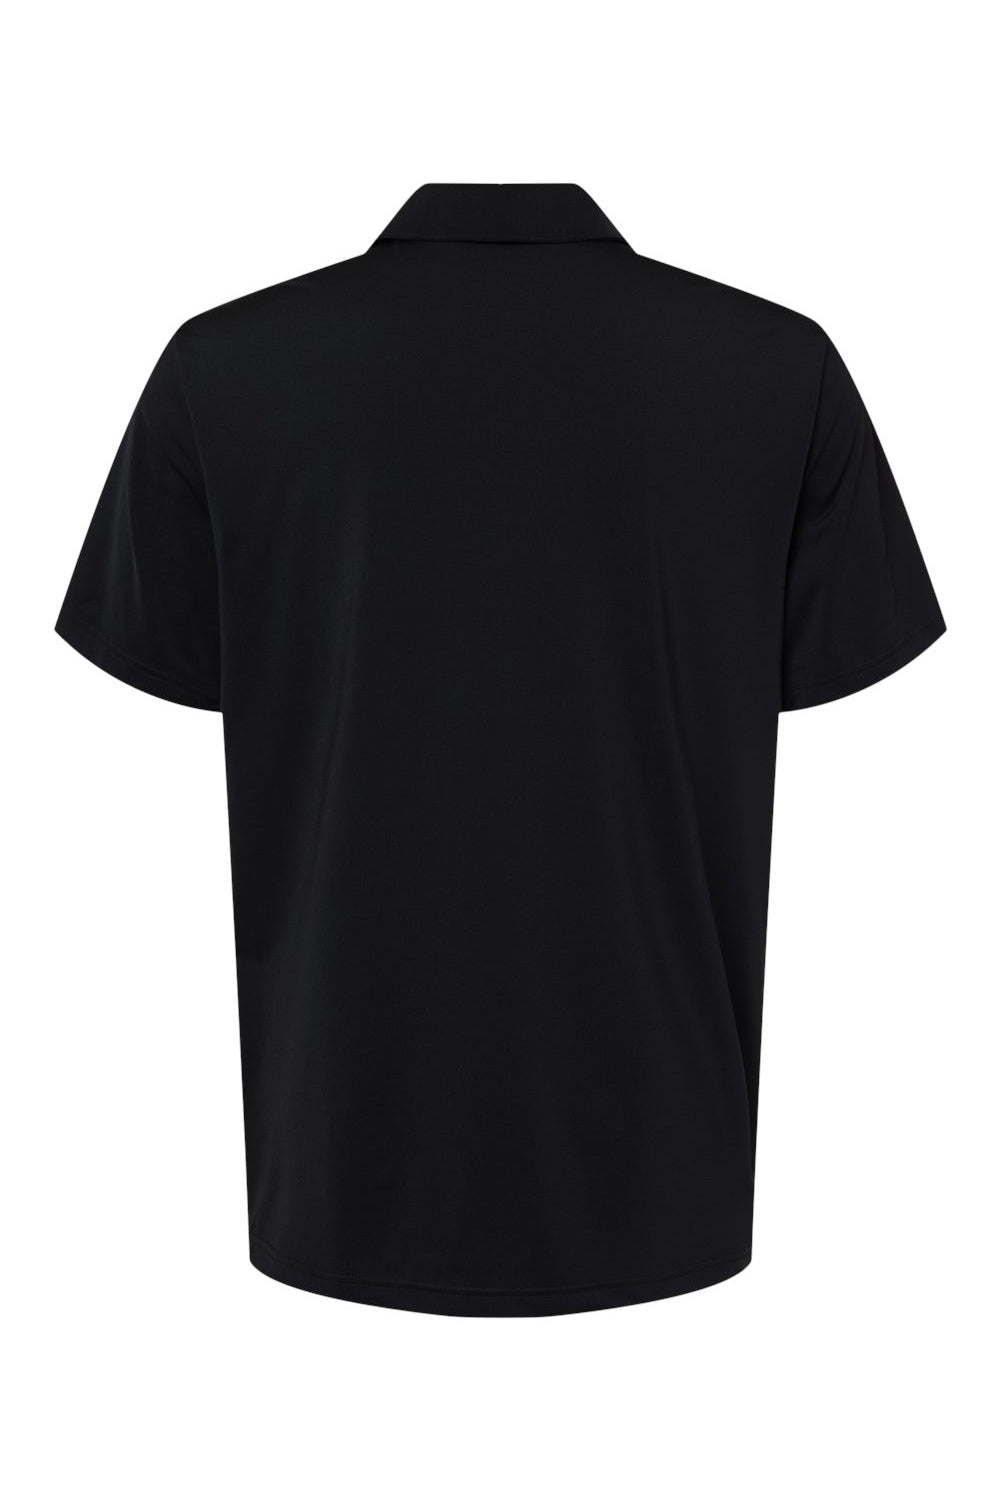 Adidas A514 Mens Ultimate Short Sleeve Polo Shirt Black Flat Back